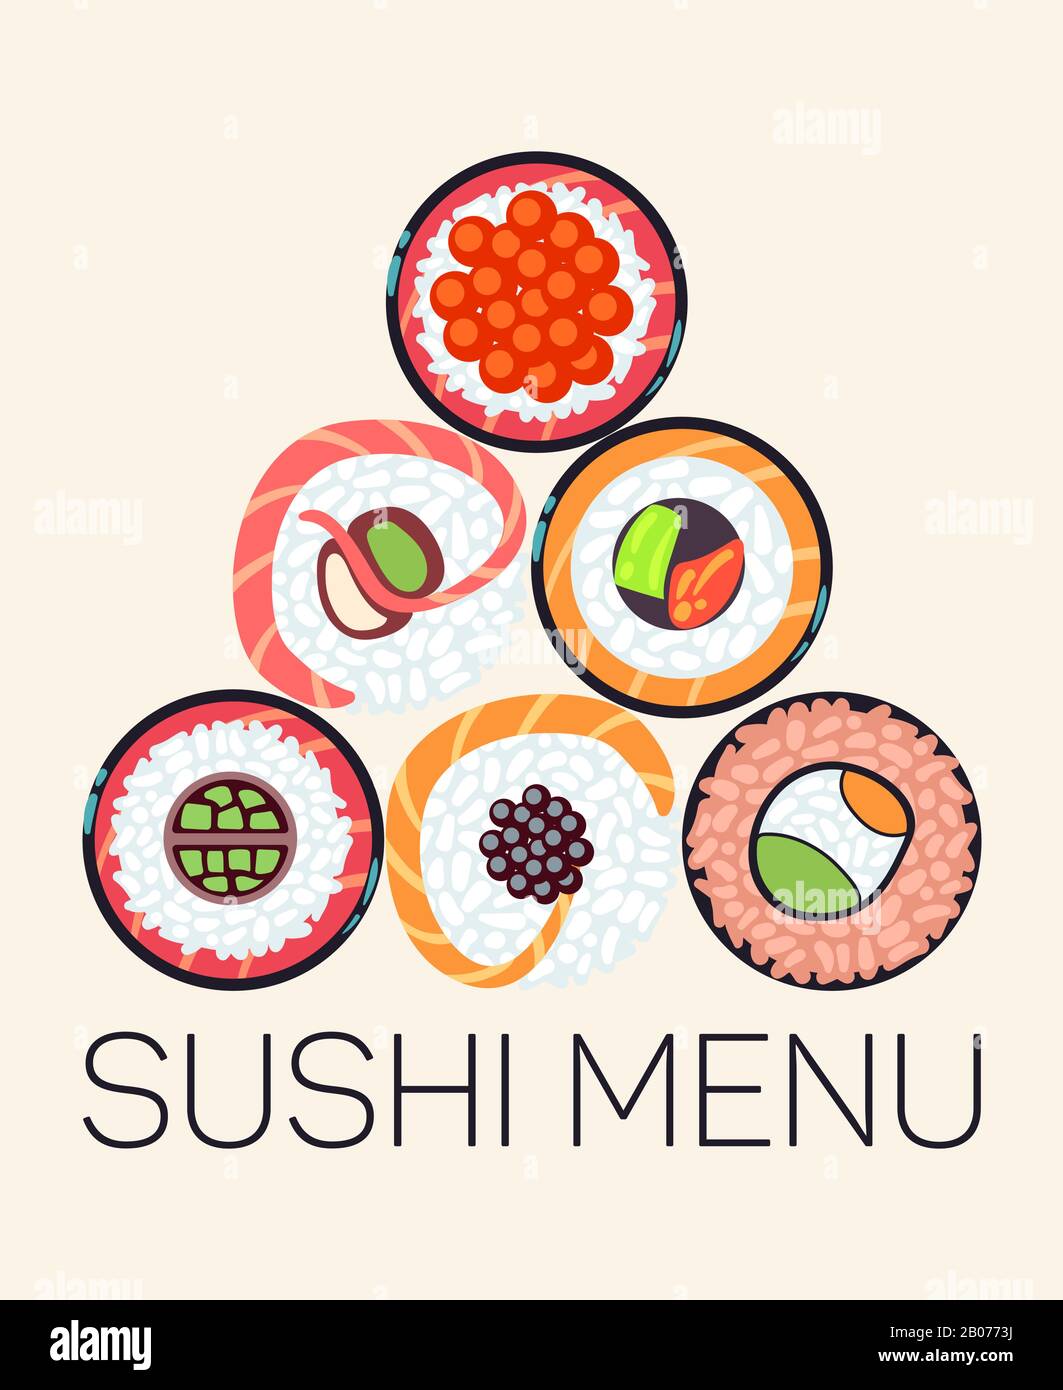 Japanese restaurant sushi menu logo template. Asian menu with roll, vector illustration Stock Vector